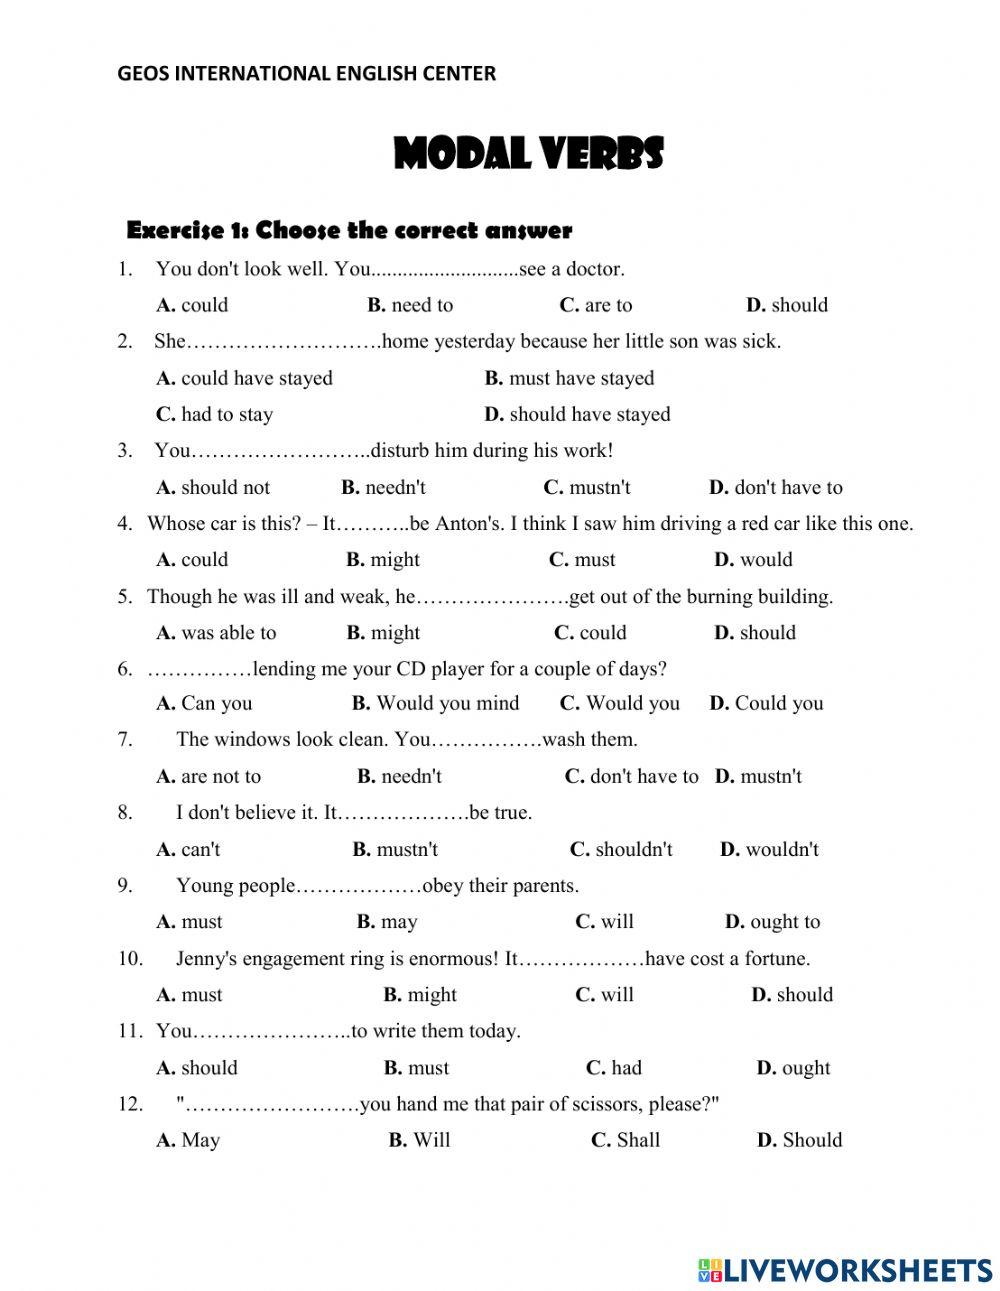 Modal verbs -Handout